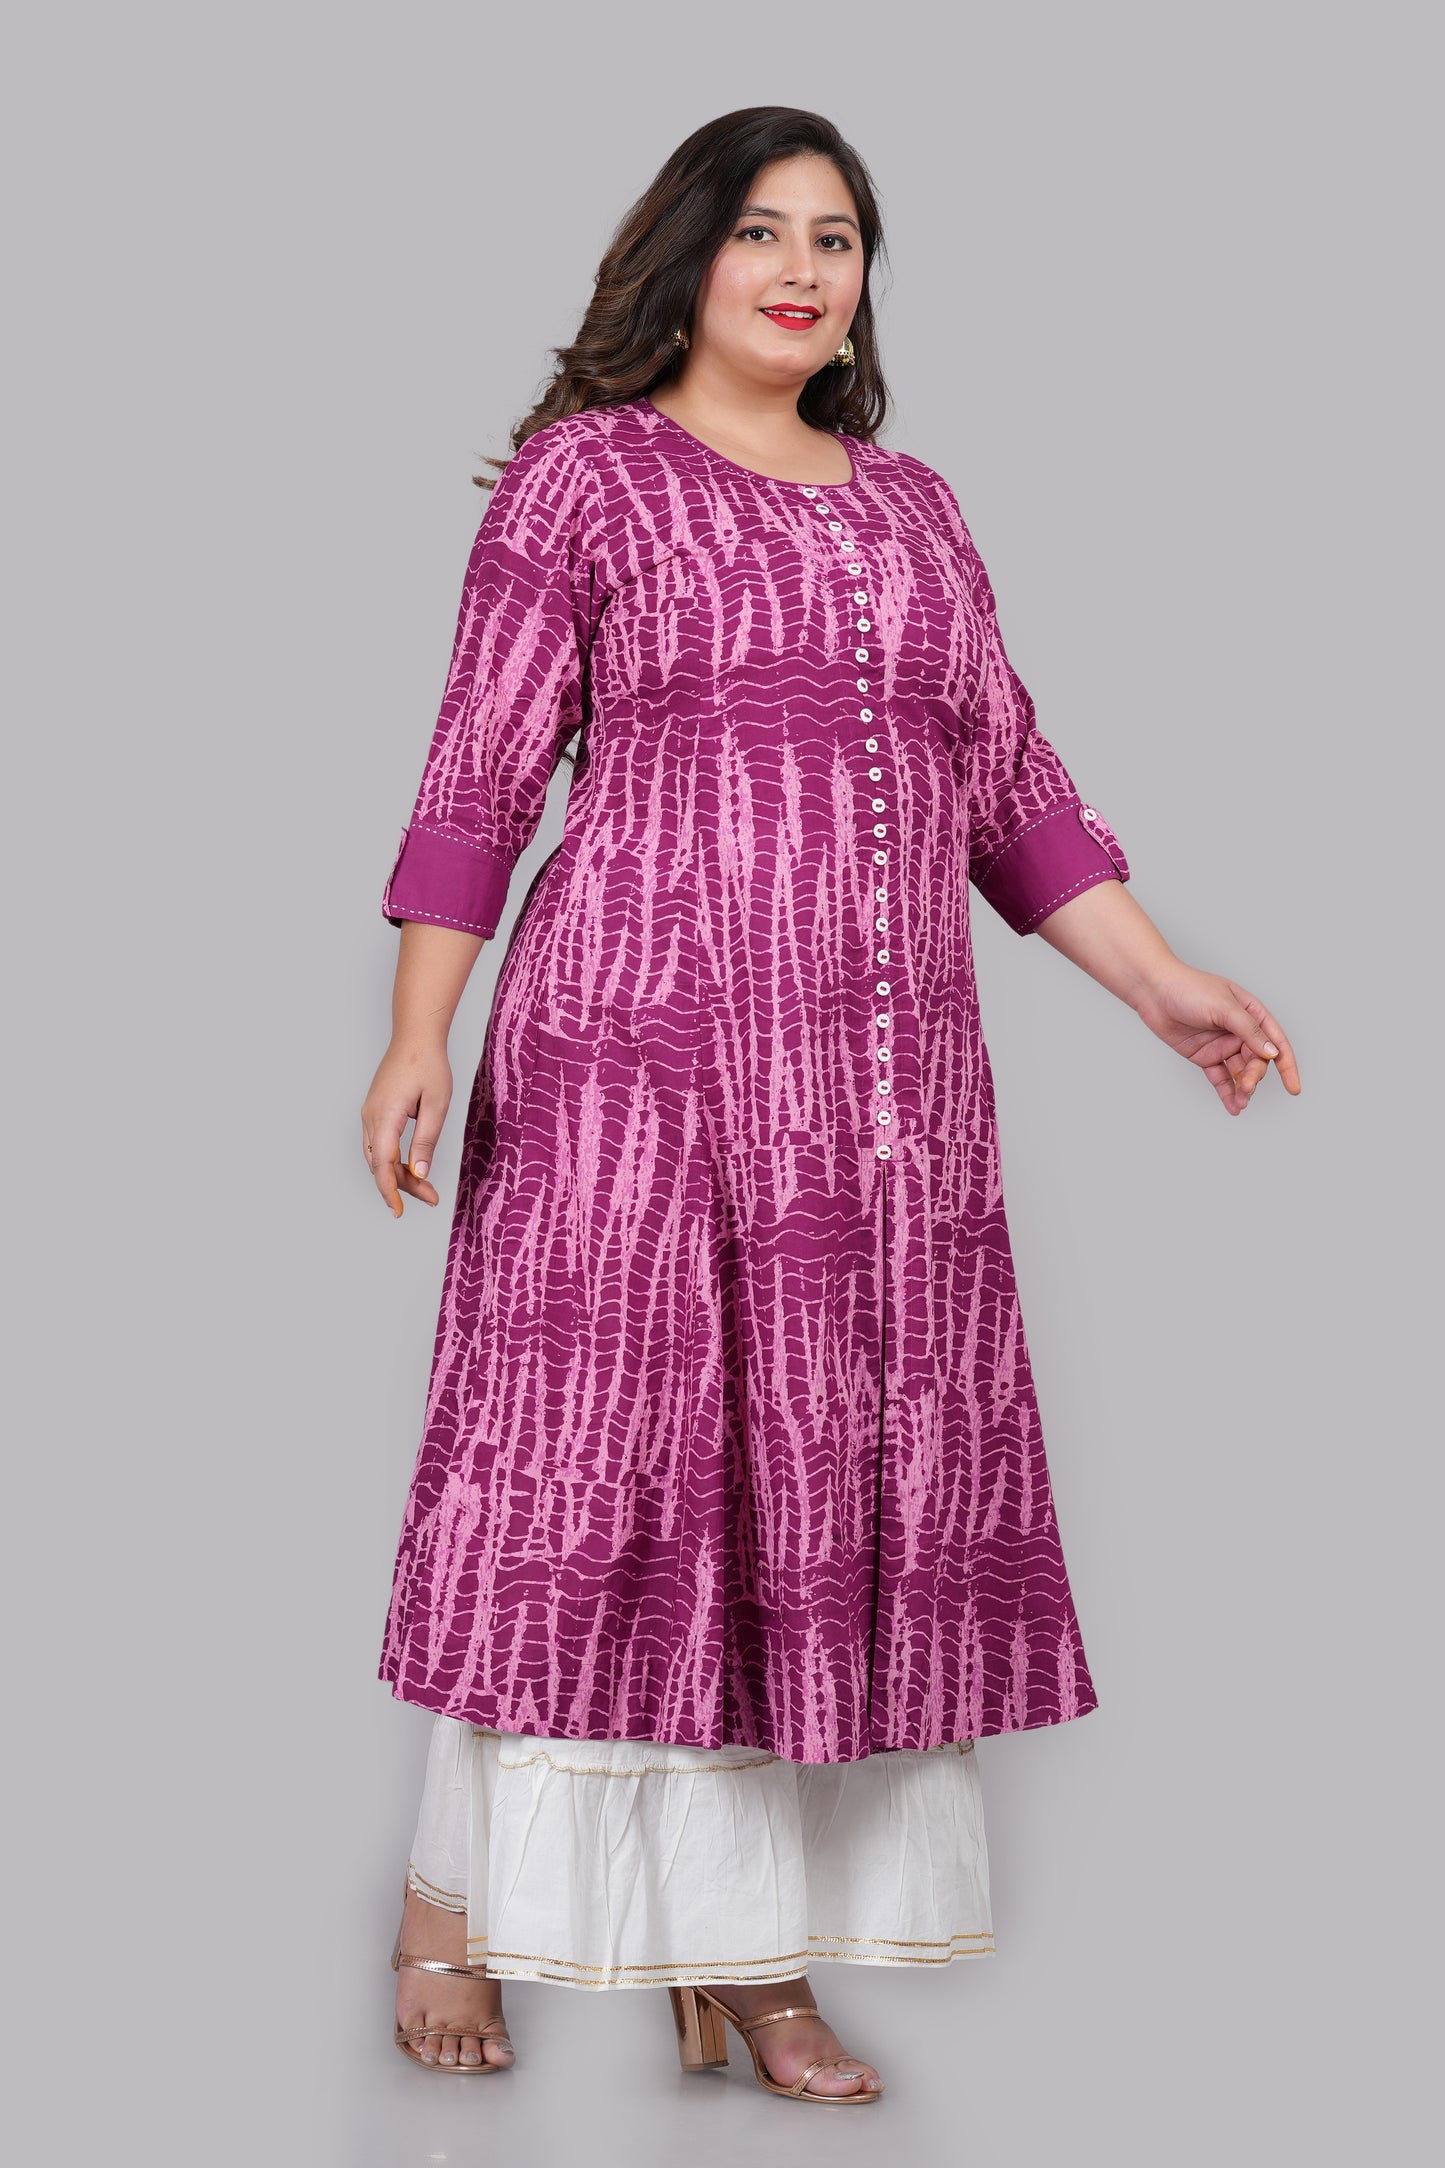 Yash Gallery Women's Cotton Blend Printed Anarkali Kurta